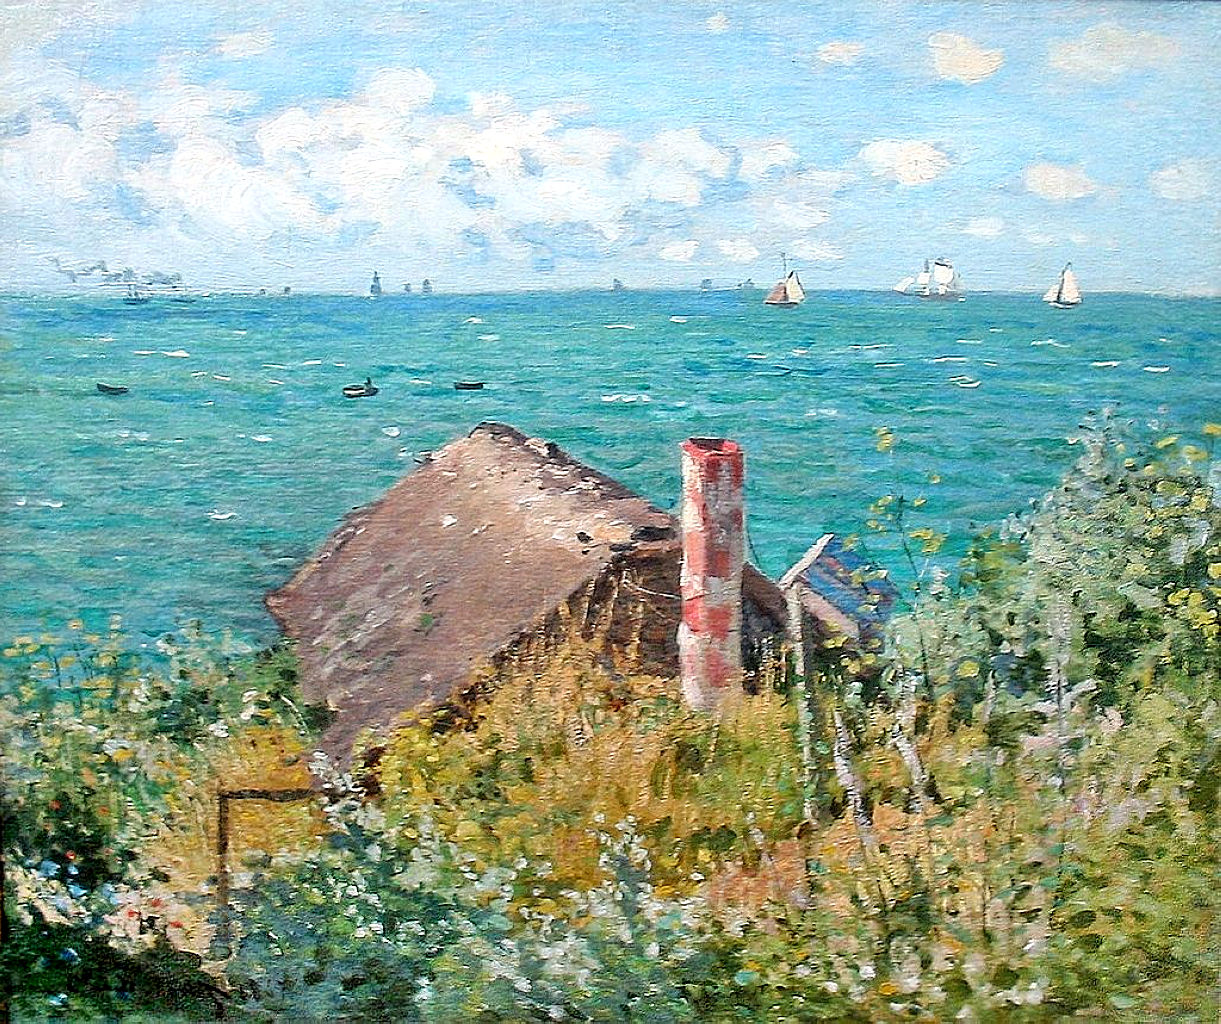 Claude+Monet-1840-1926 (739).jpg